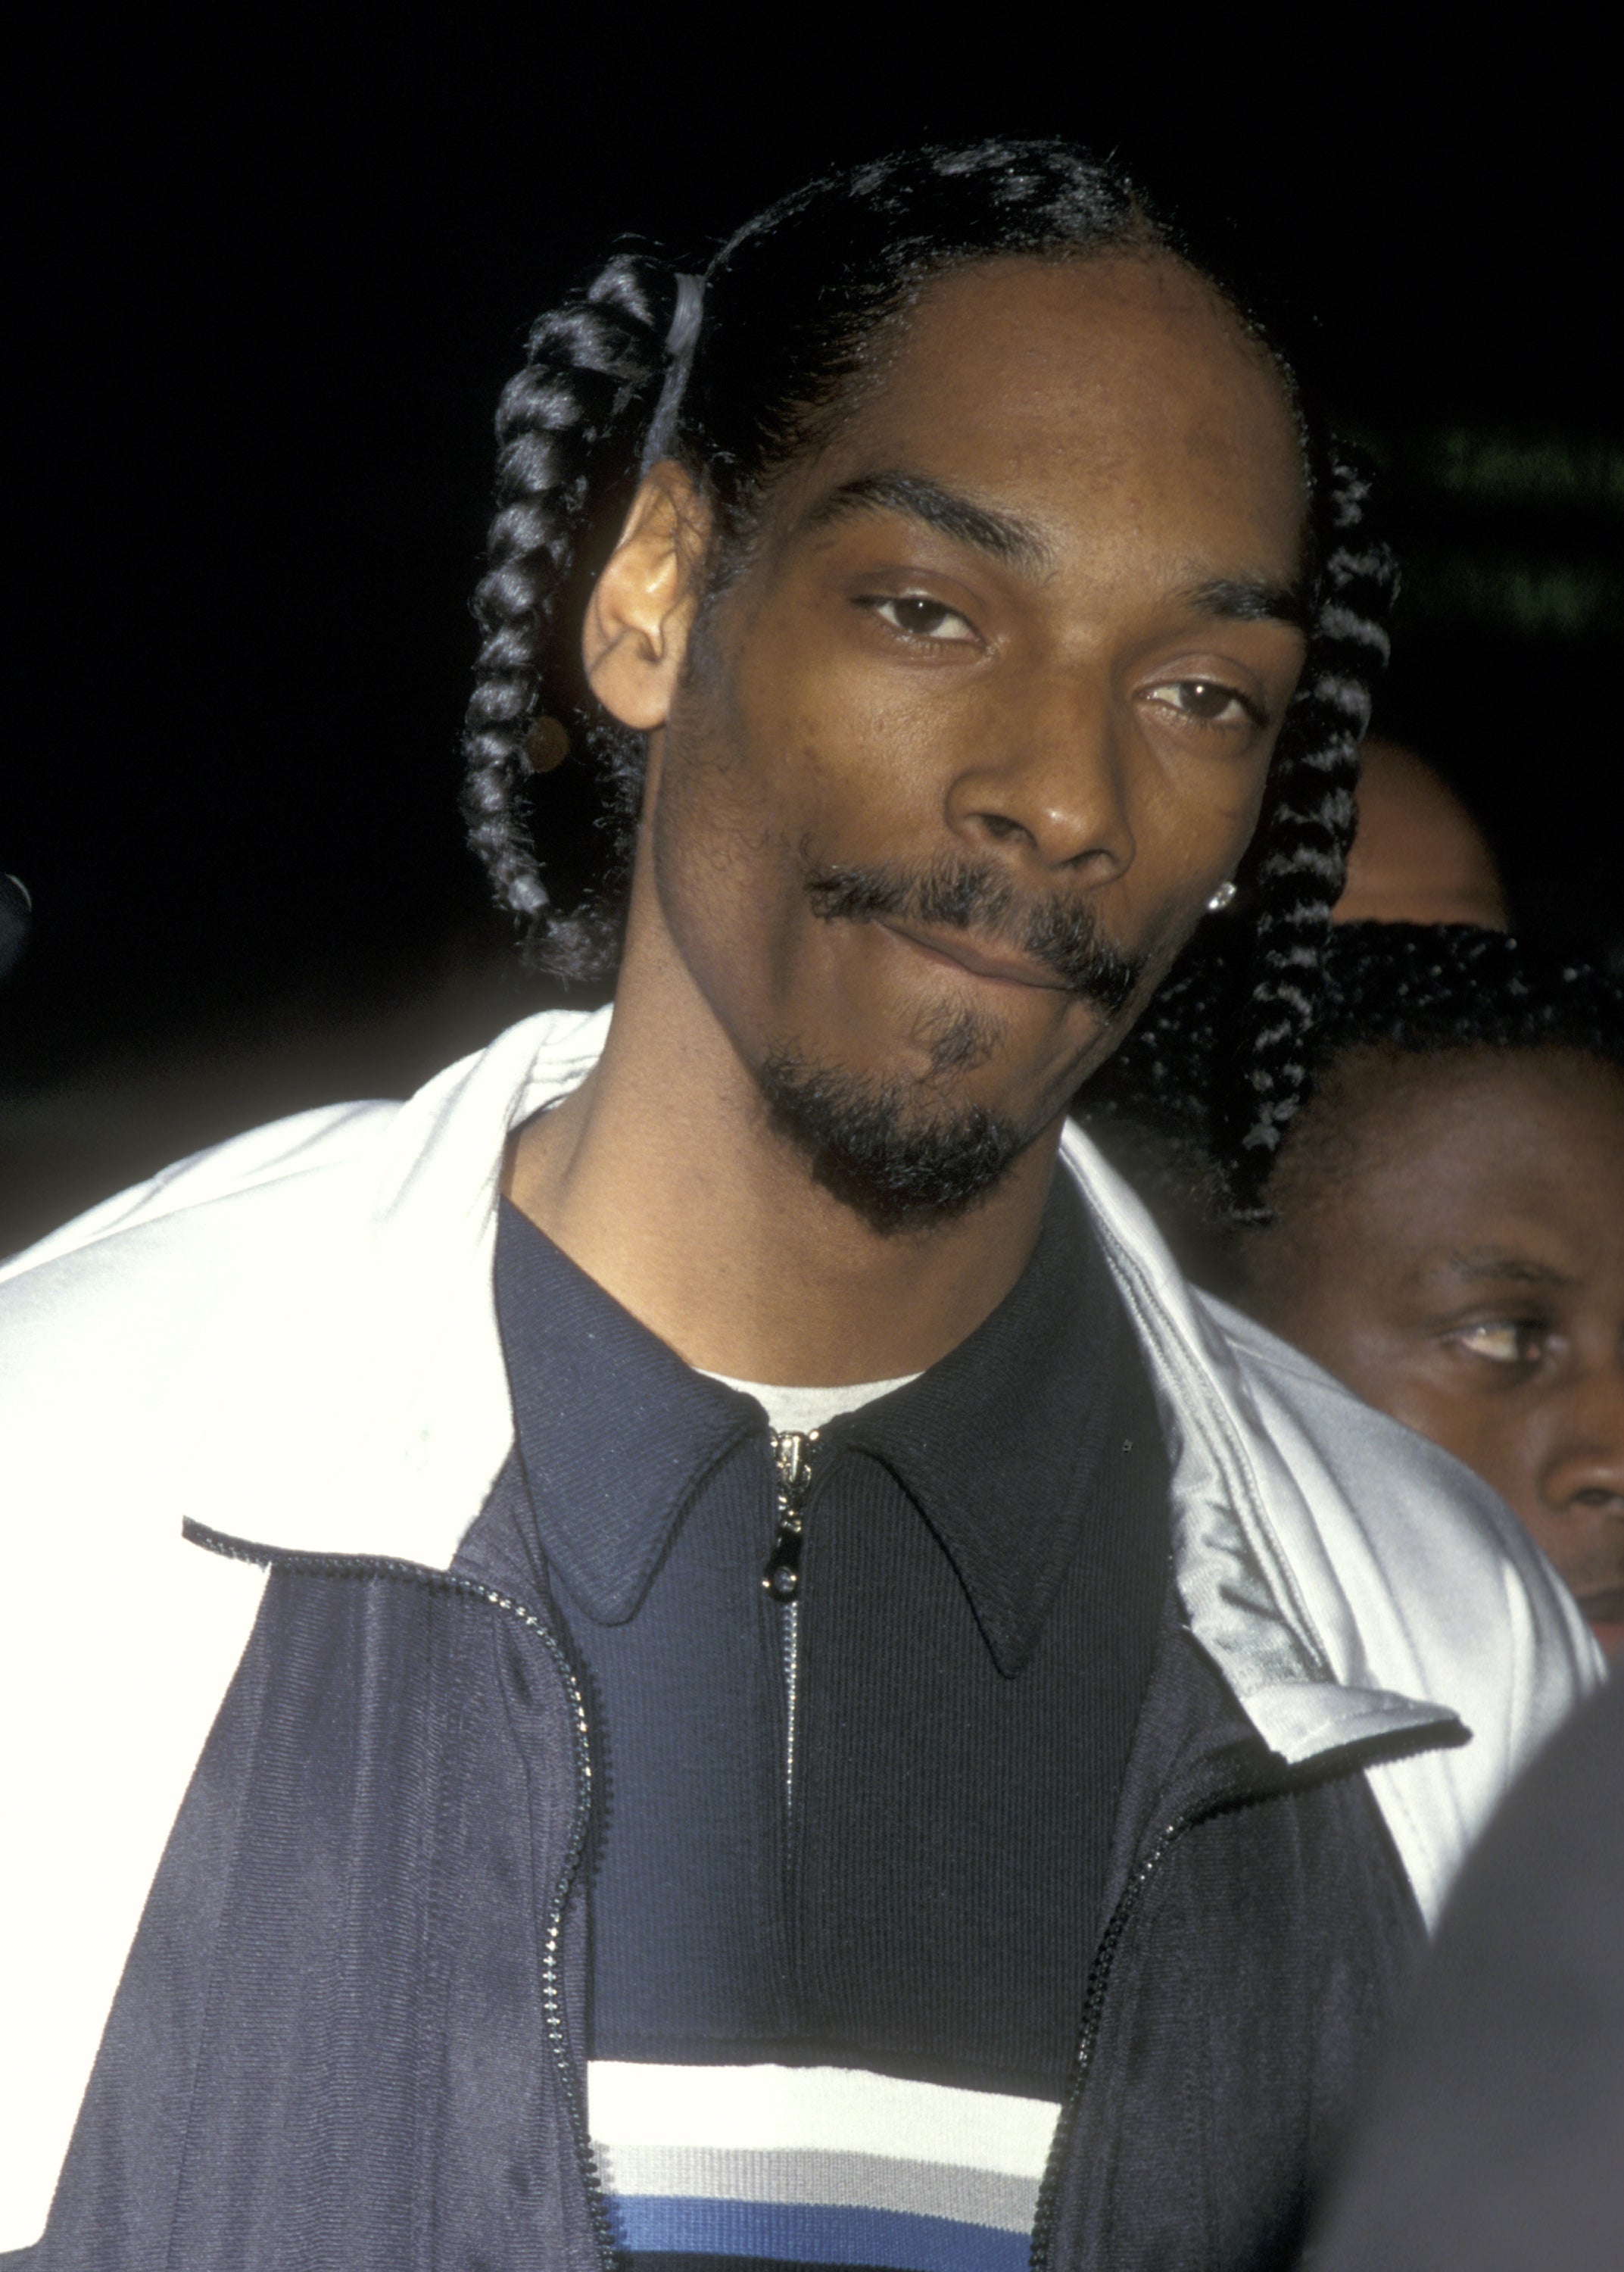 45 Times Snoop Dogg Was #HairGoals